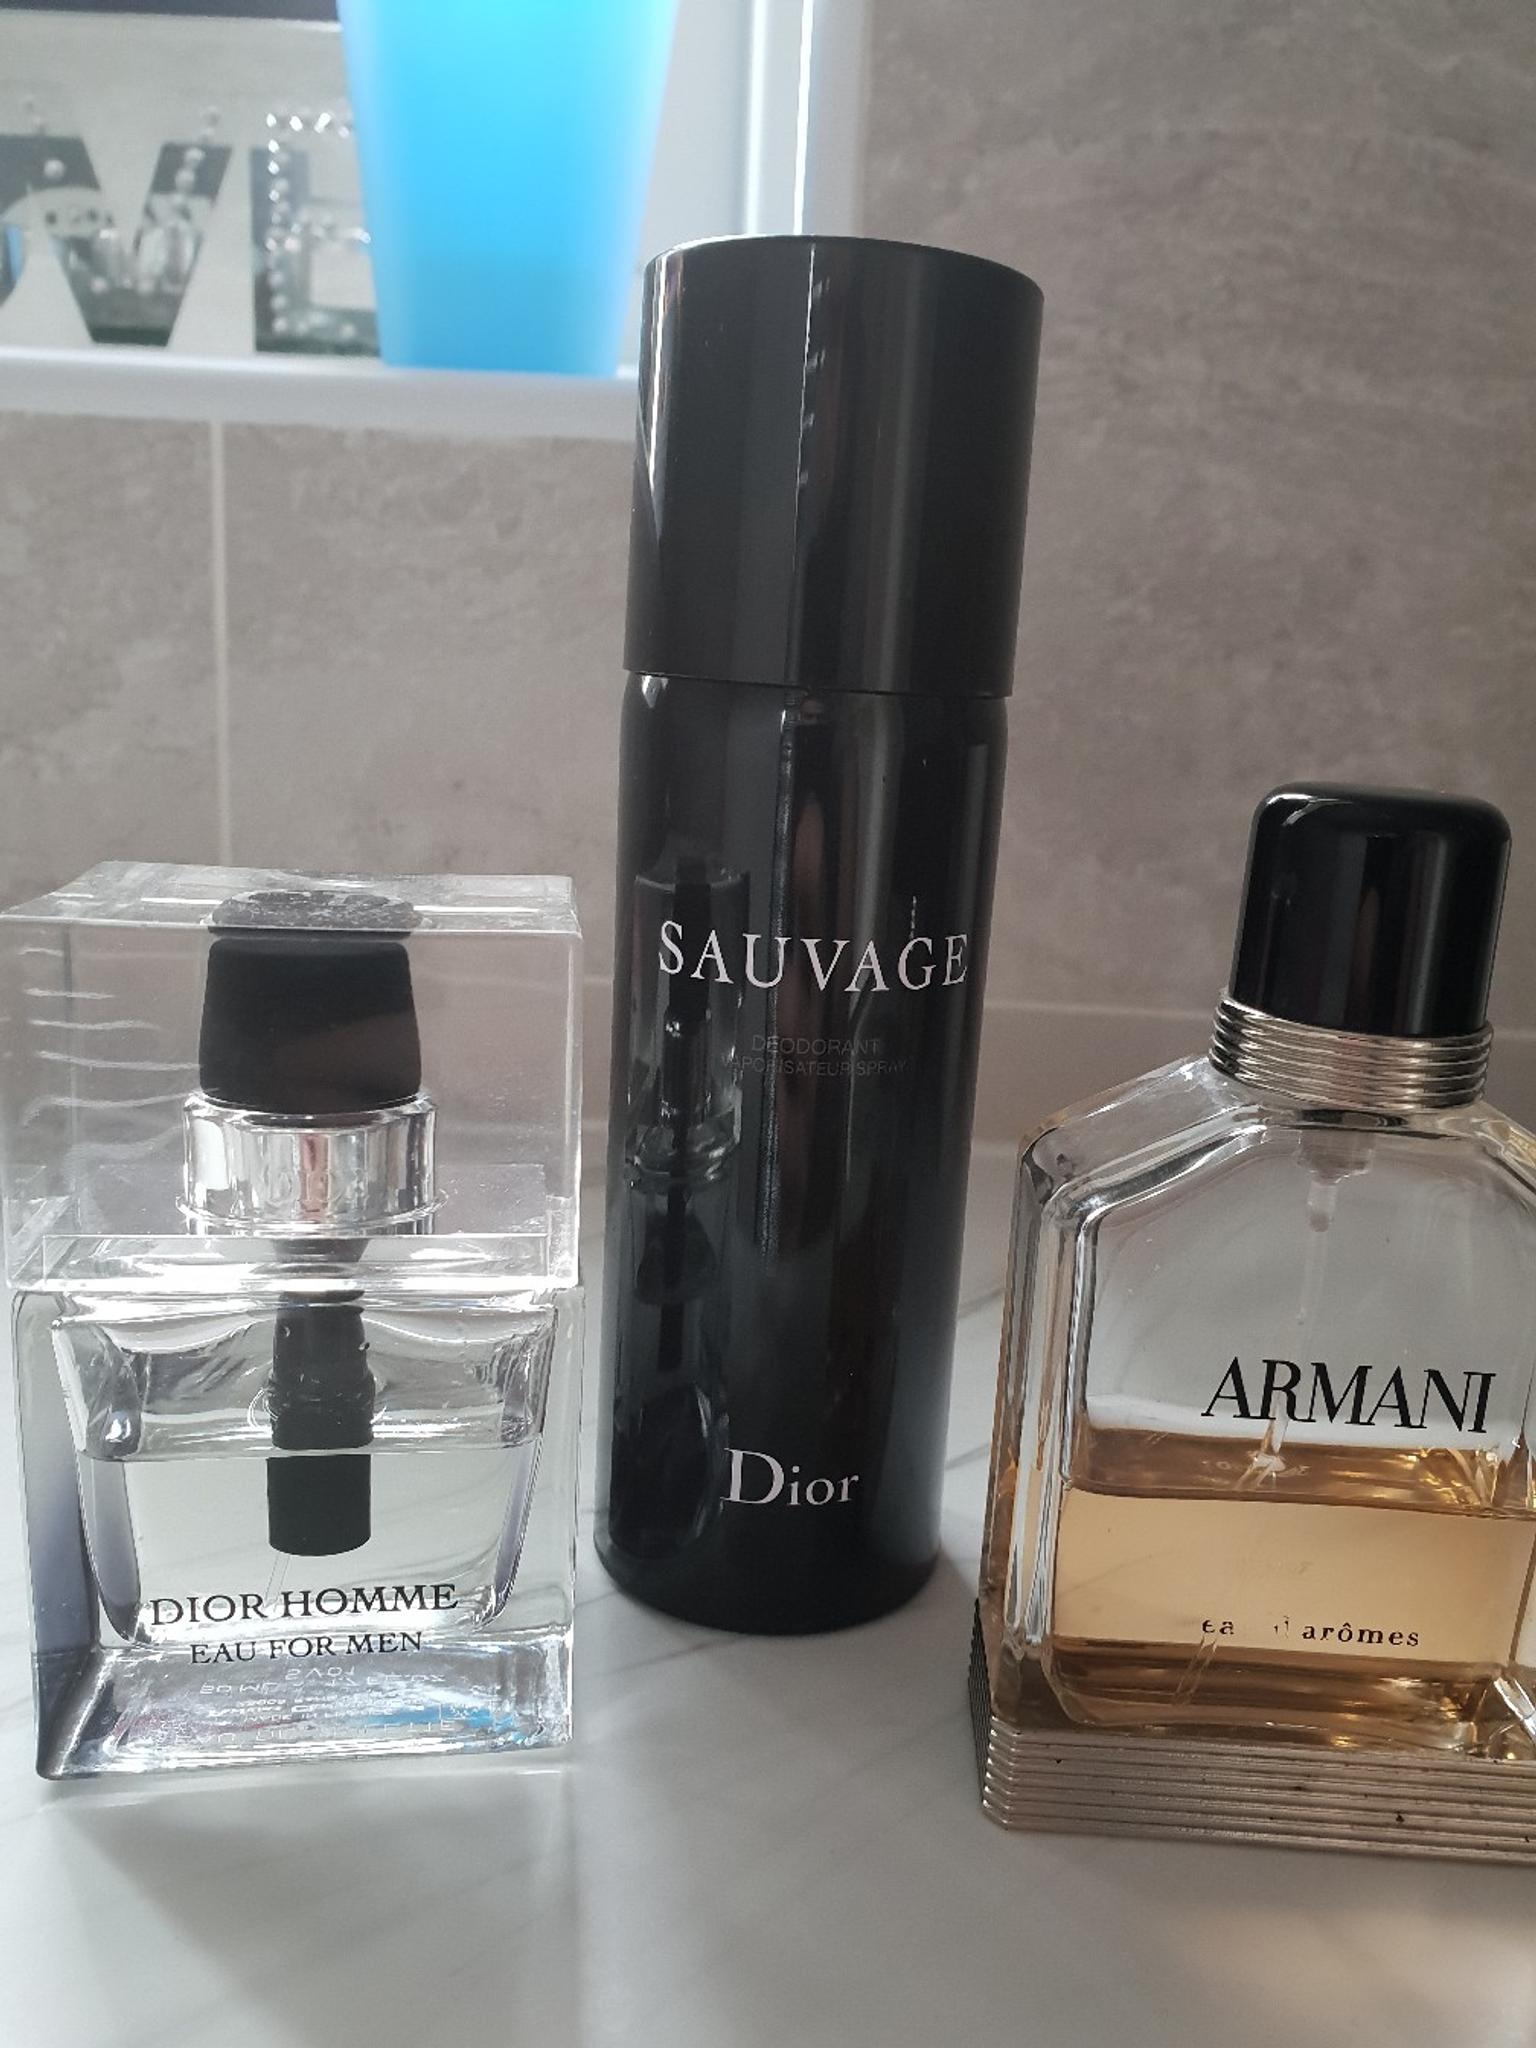 dior armani perfume - 54% OFF 